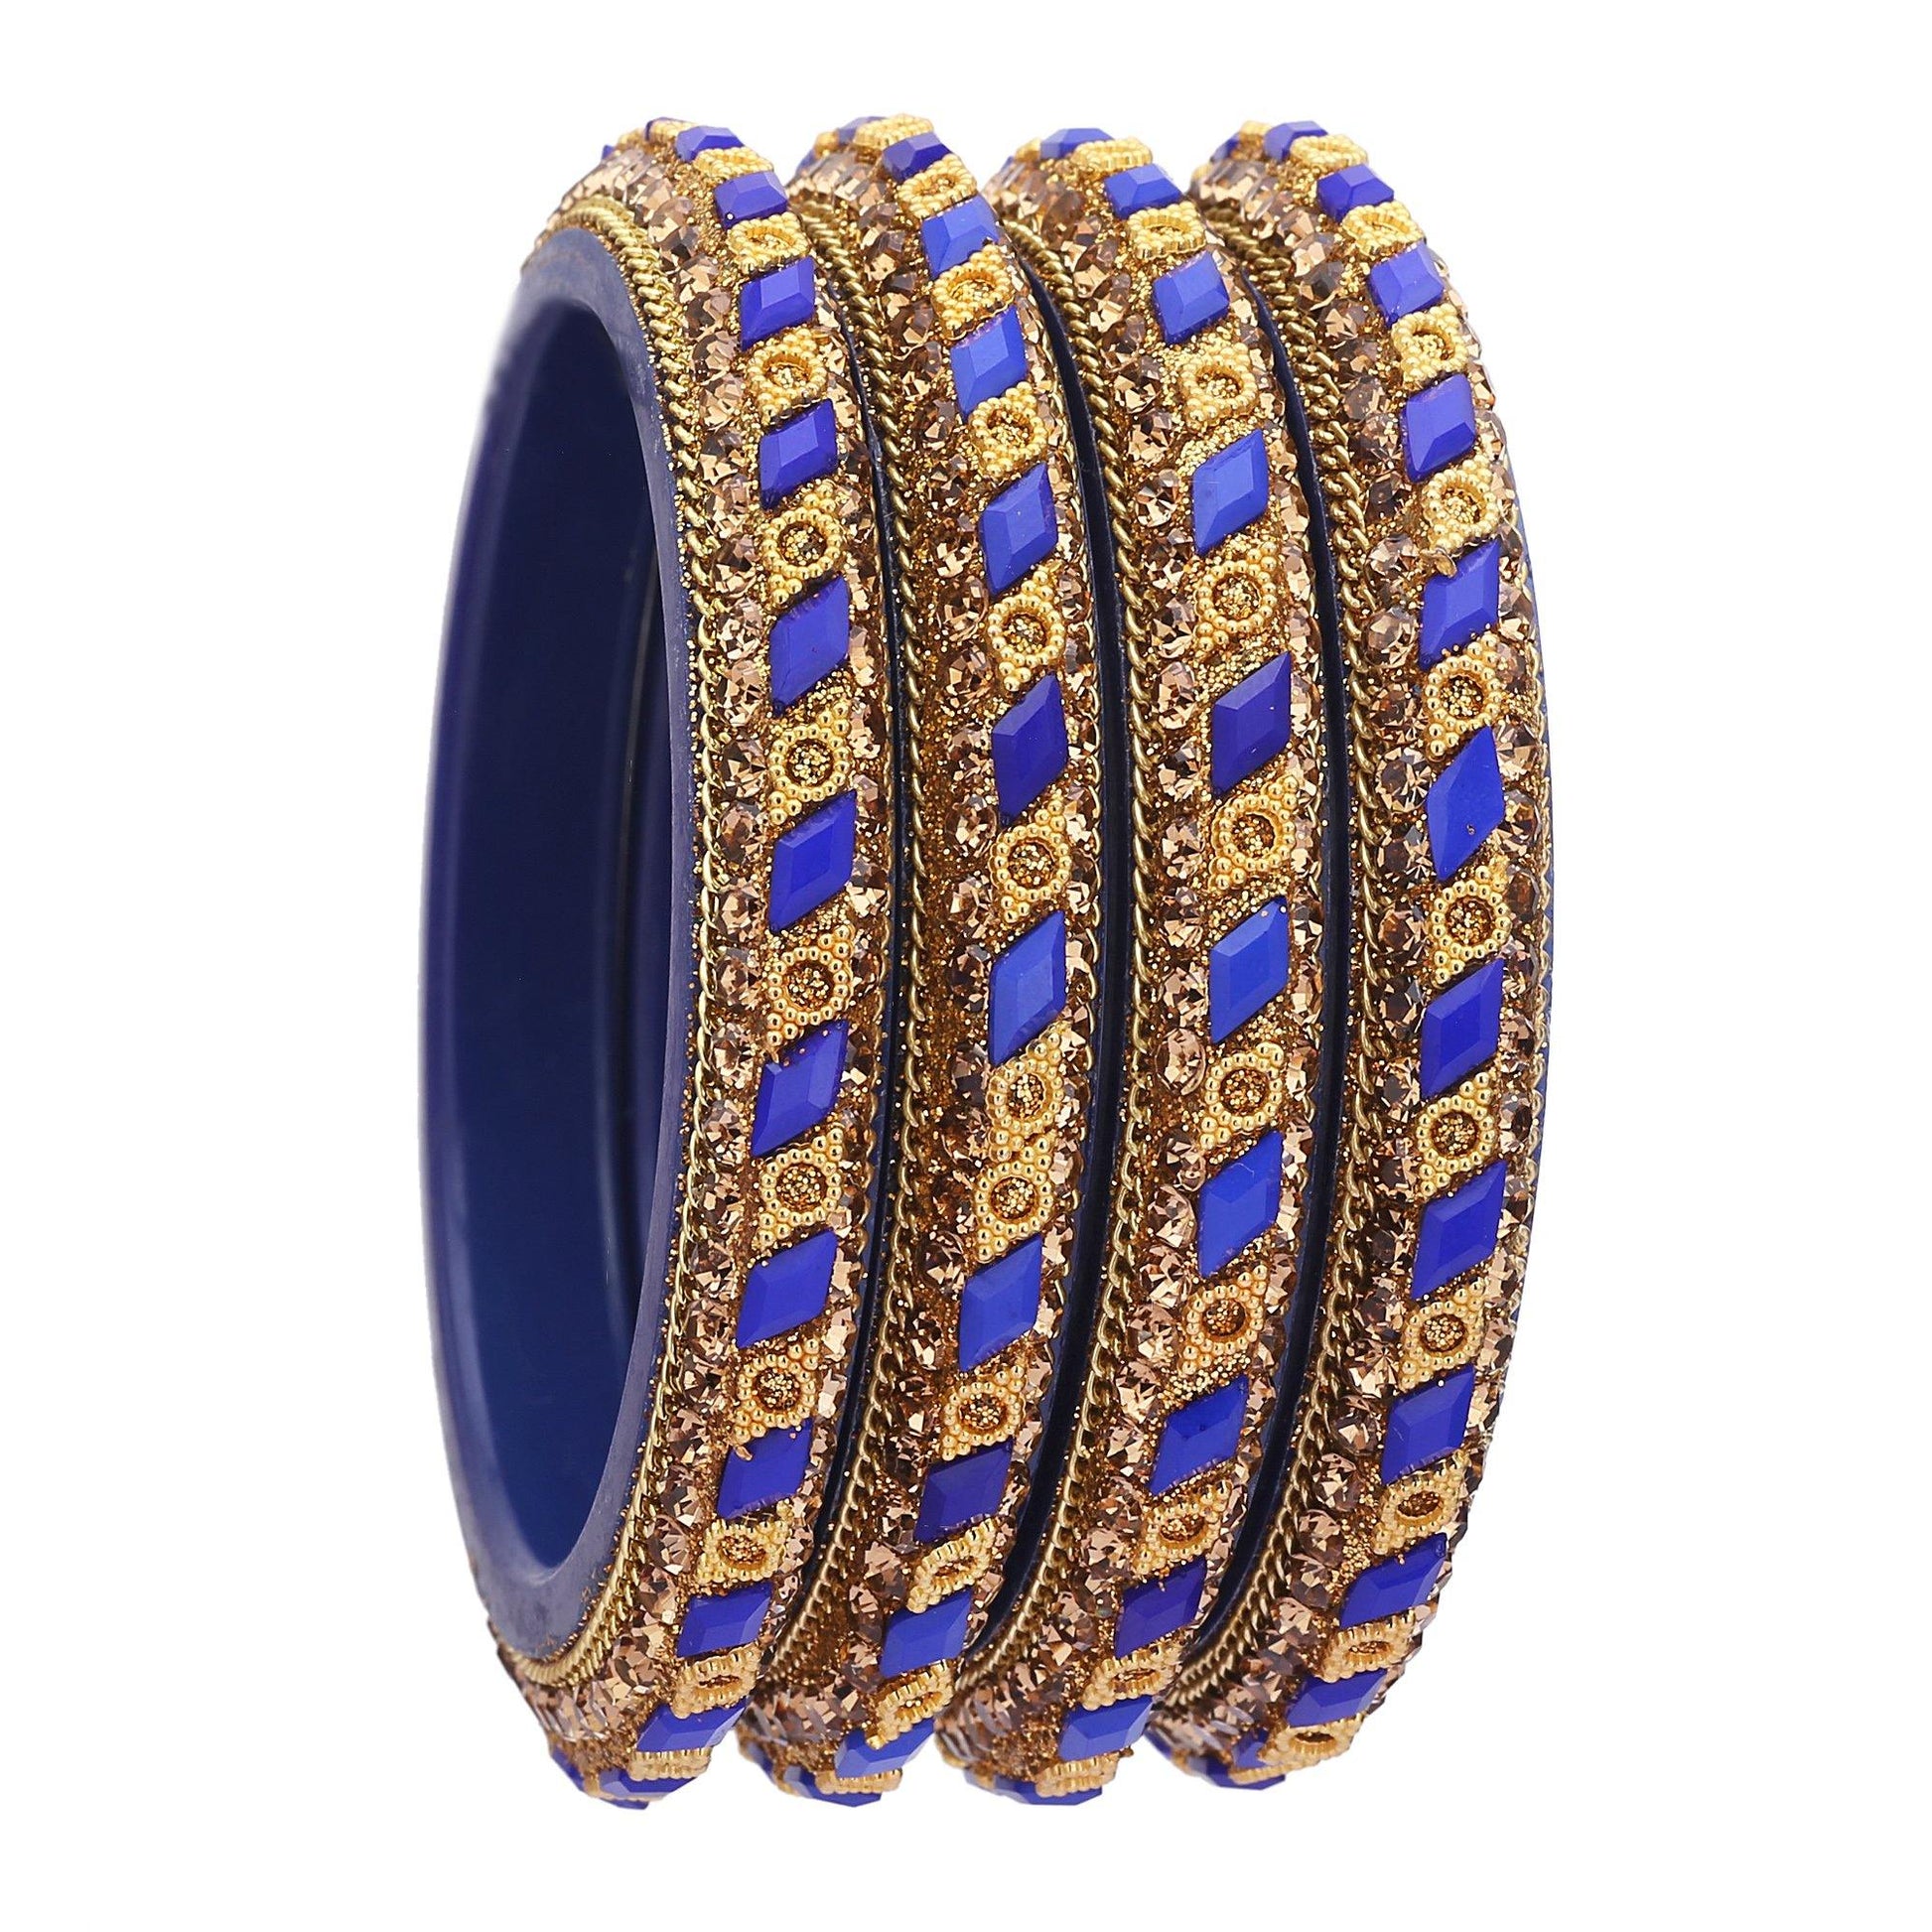 sukriti rajasthani contemporary blue kada seep acrylic bangles for girls & women – set of 4